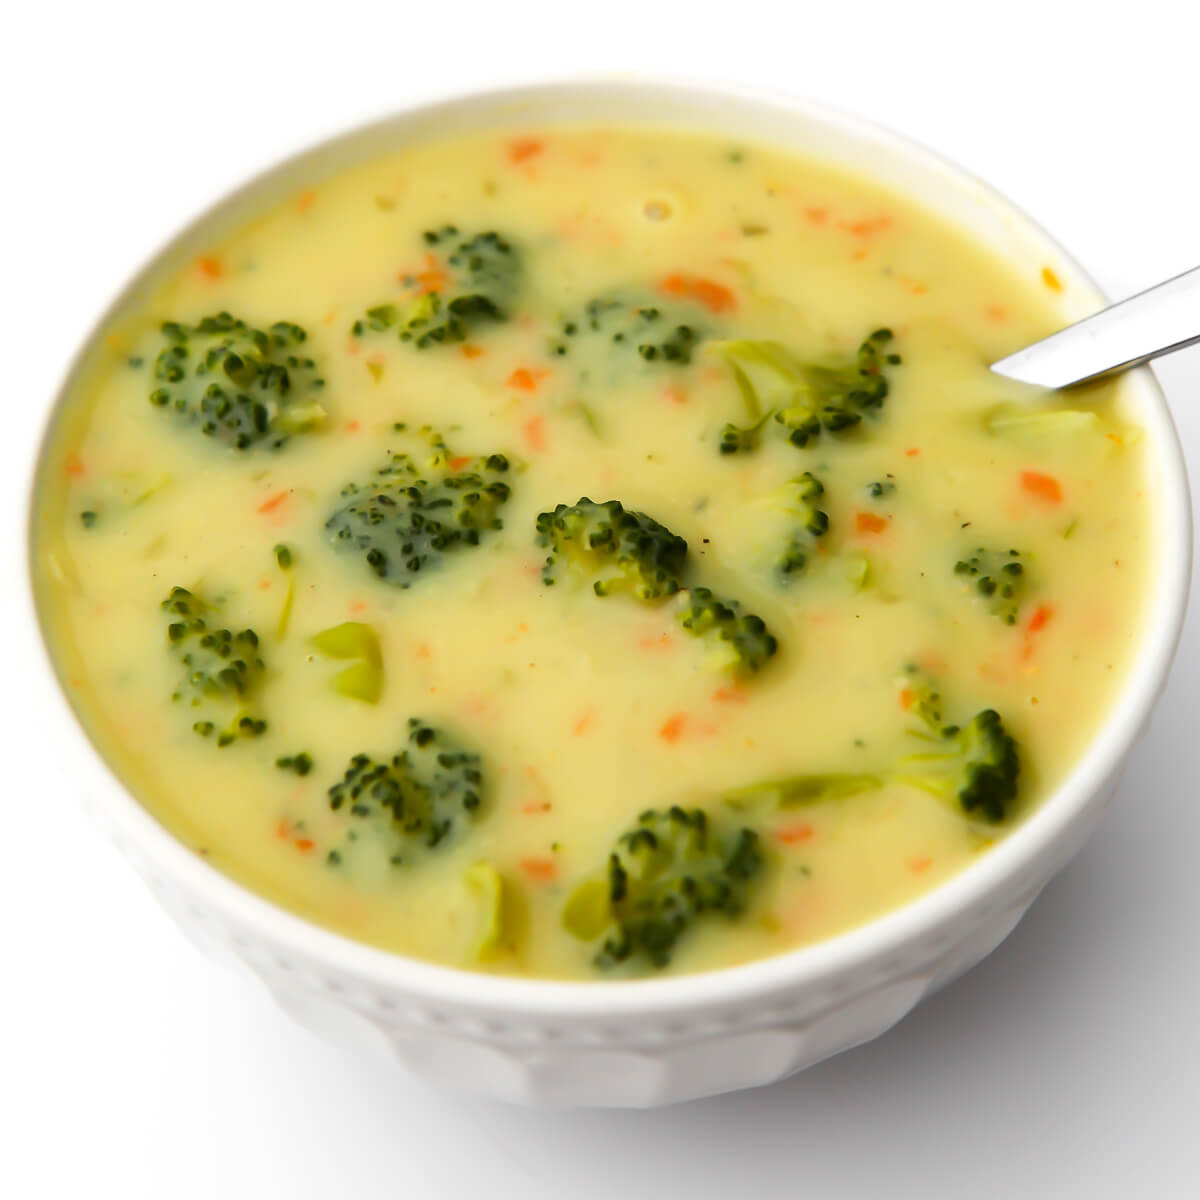 Vegan Cream of Broccoli Soup - The Hidden Veggies